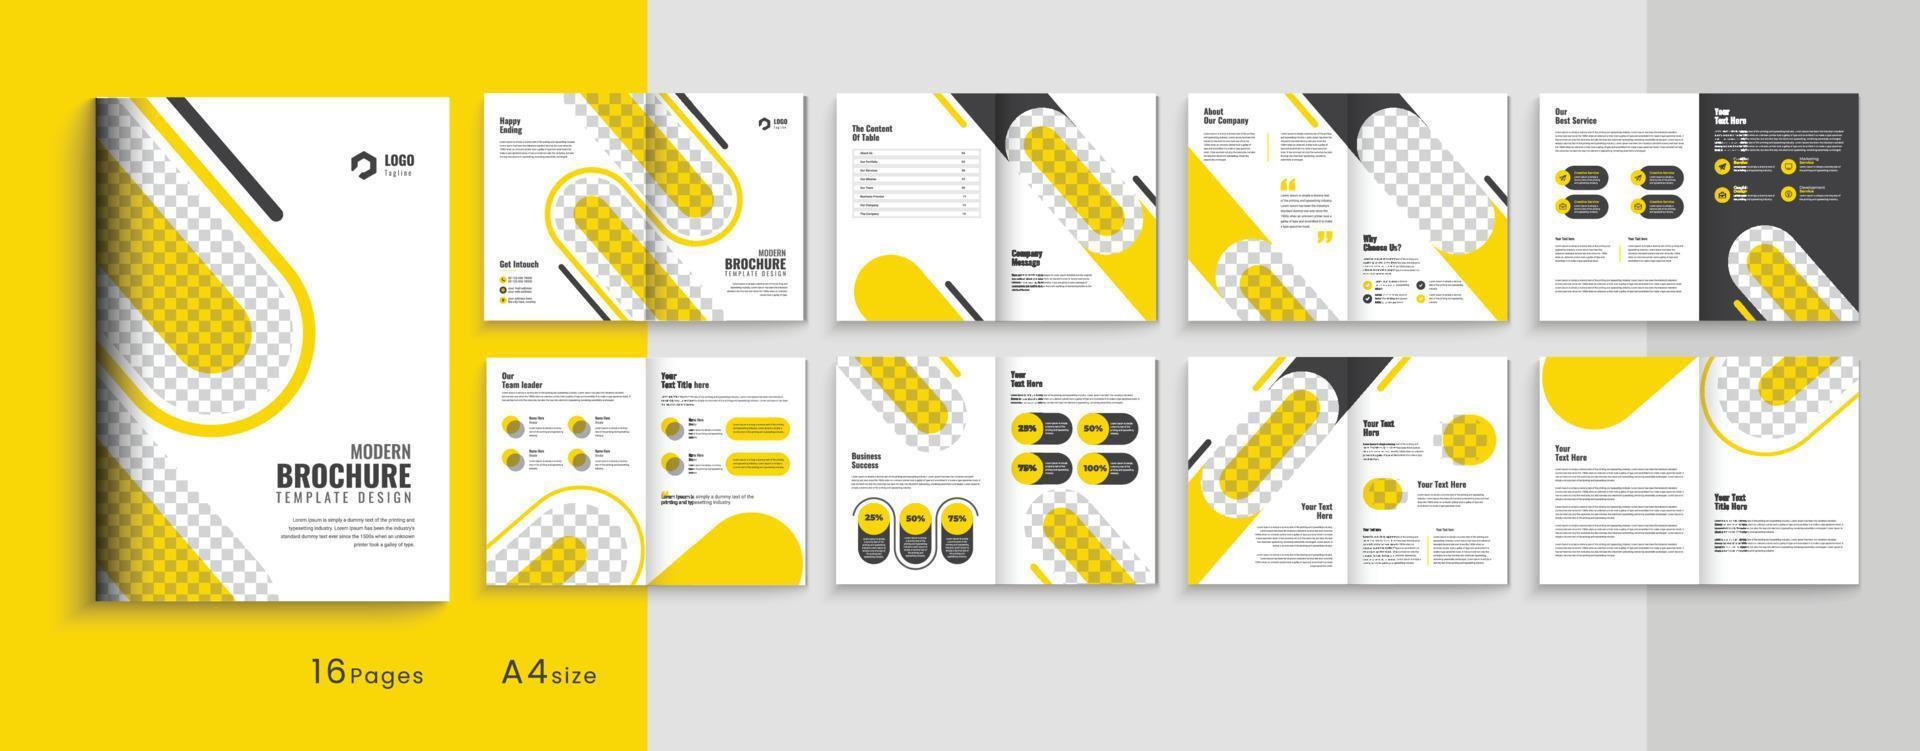 Company profile, 16 pages business profile, brochure design, company bi-fold brochure template vector